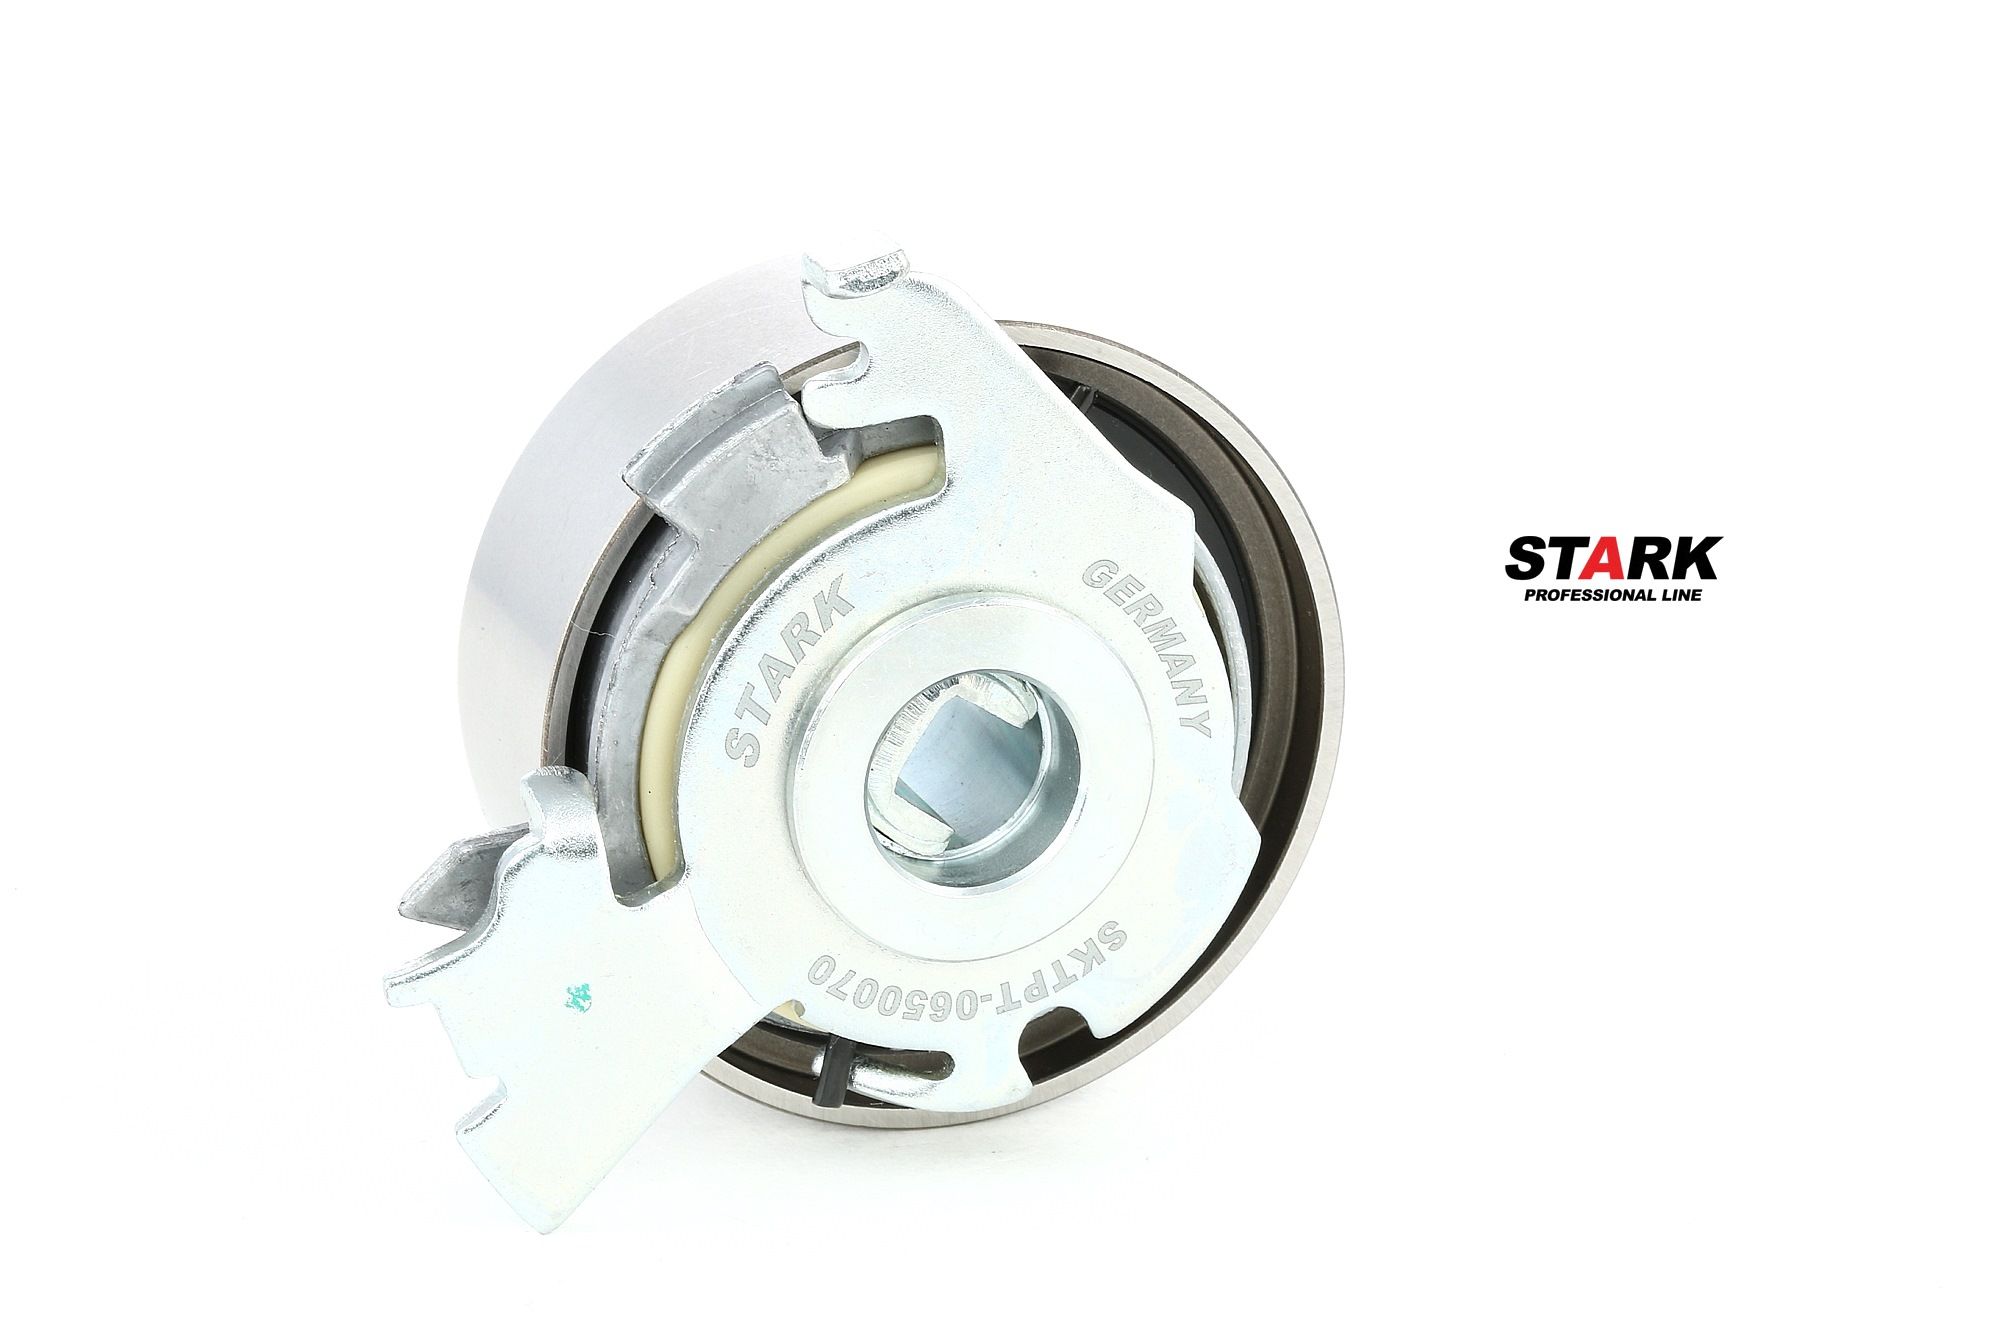 Opel Timing belt tensioner pulley STARK SKTPT-0650070 at a good price